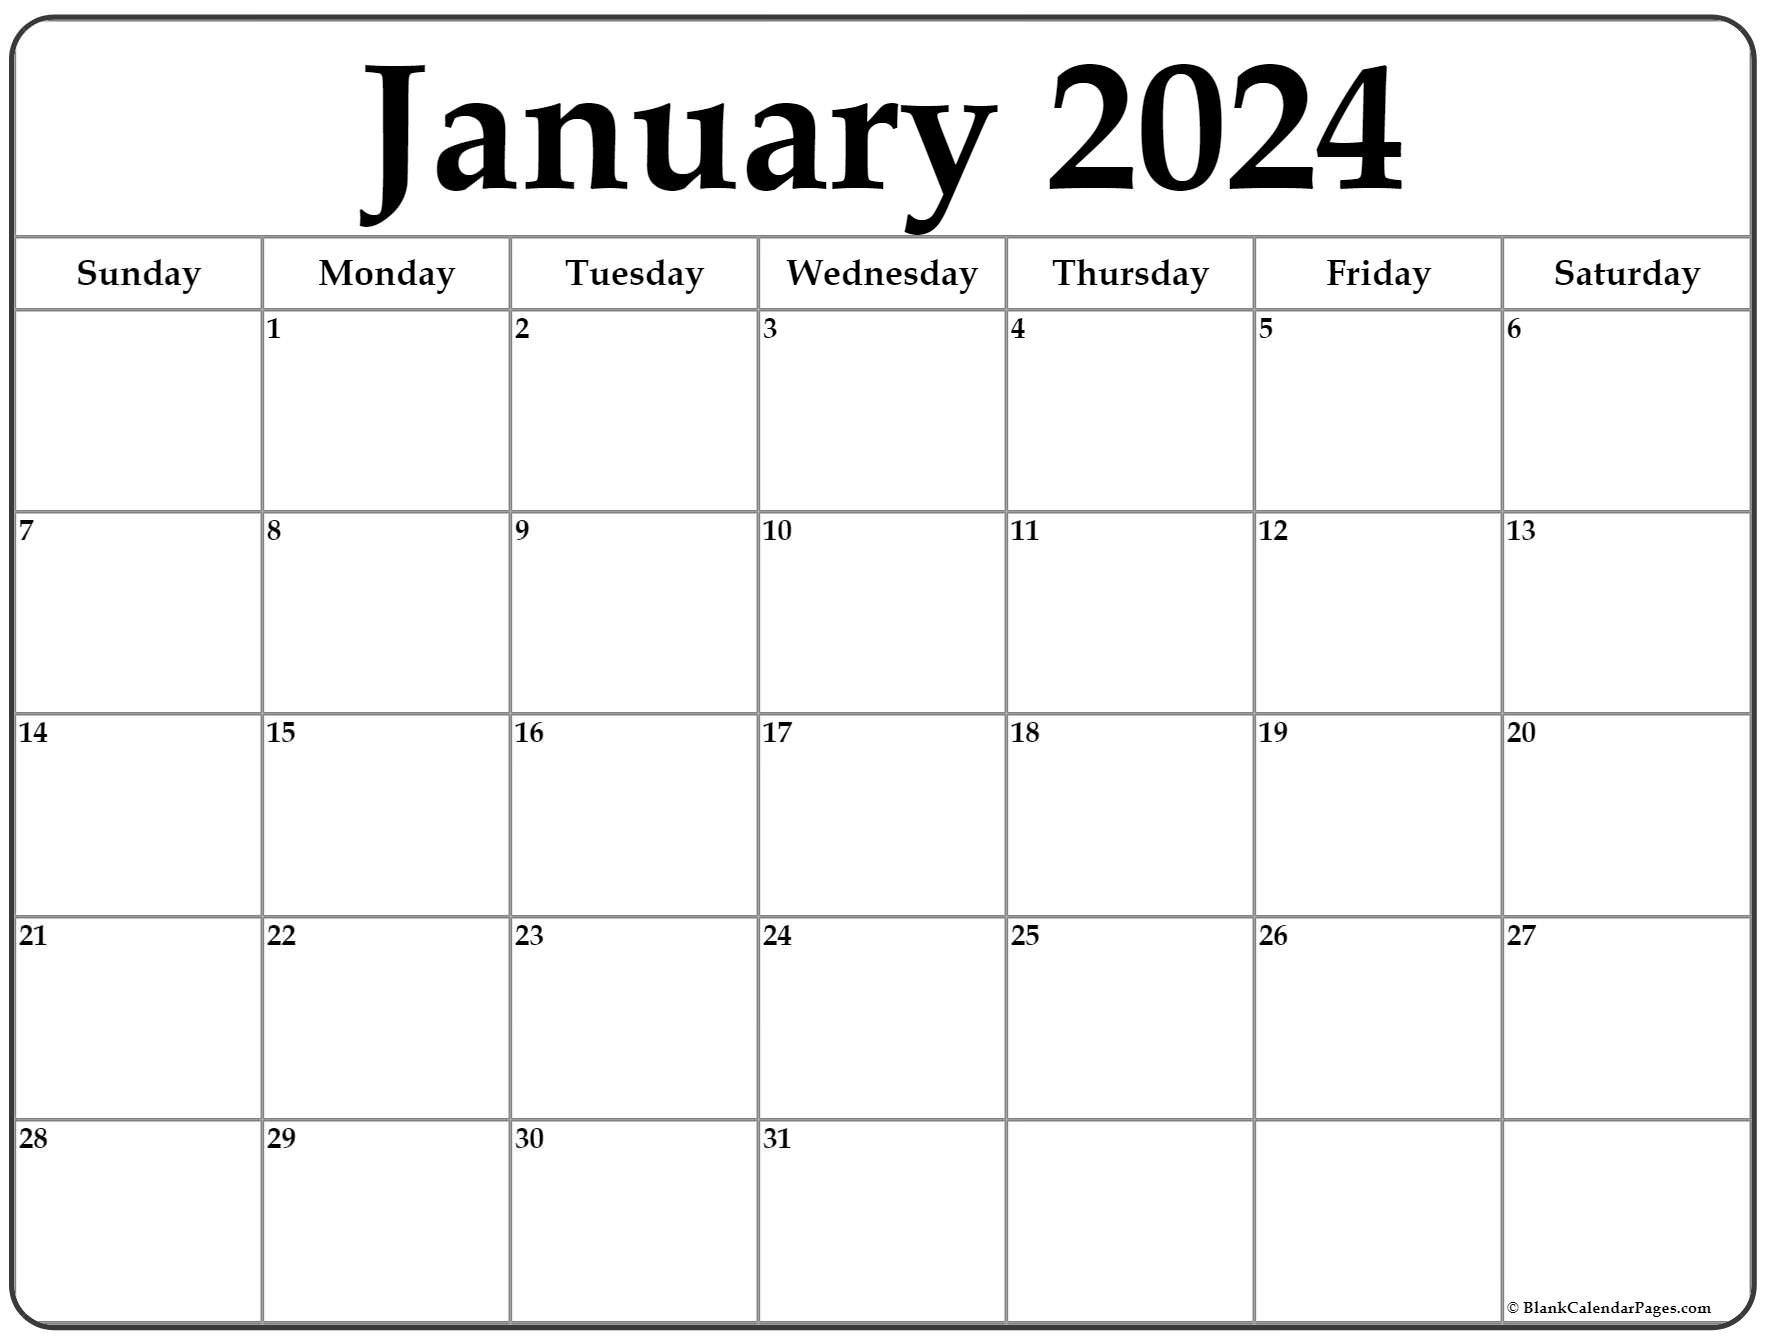 January 2024 Calendar | Free Printable Calendar for Monthly Printable 2024 Calendar